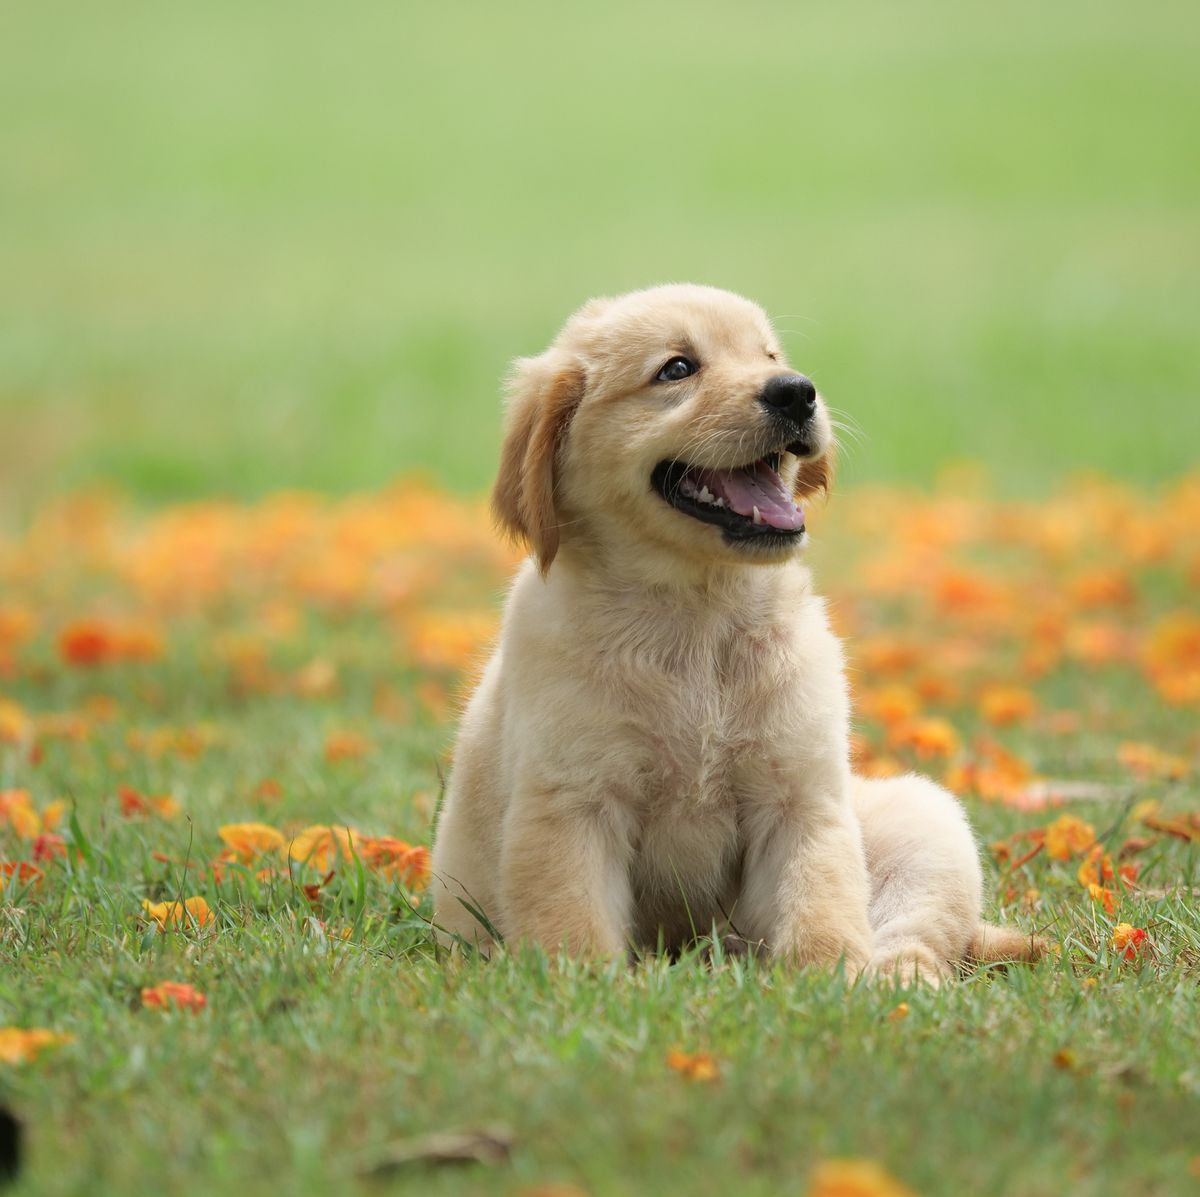 dog-puppy-on-garden-royalty-free-image-1586966191.jpg